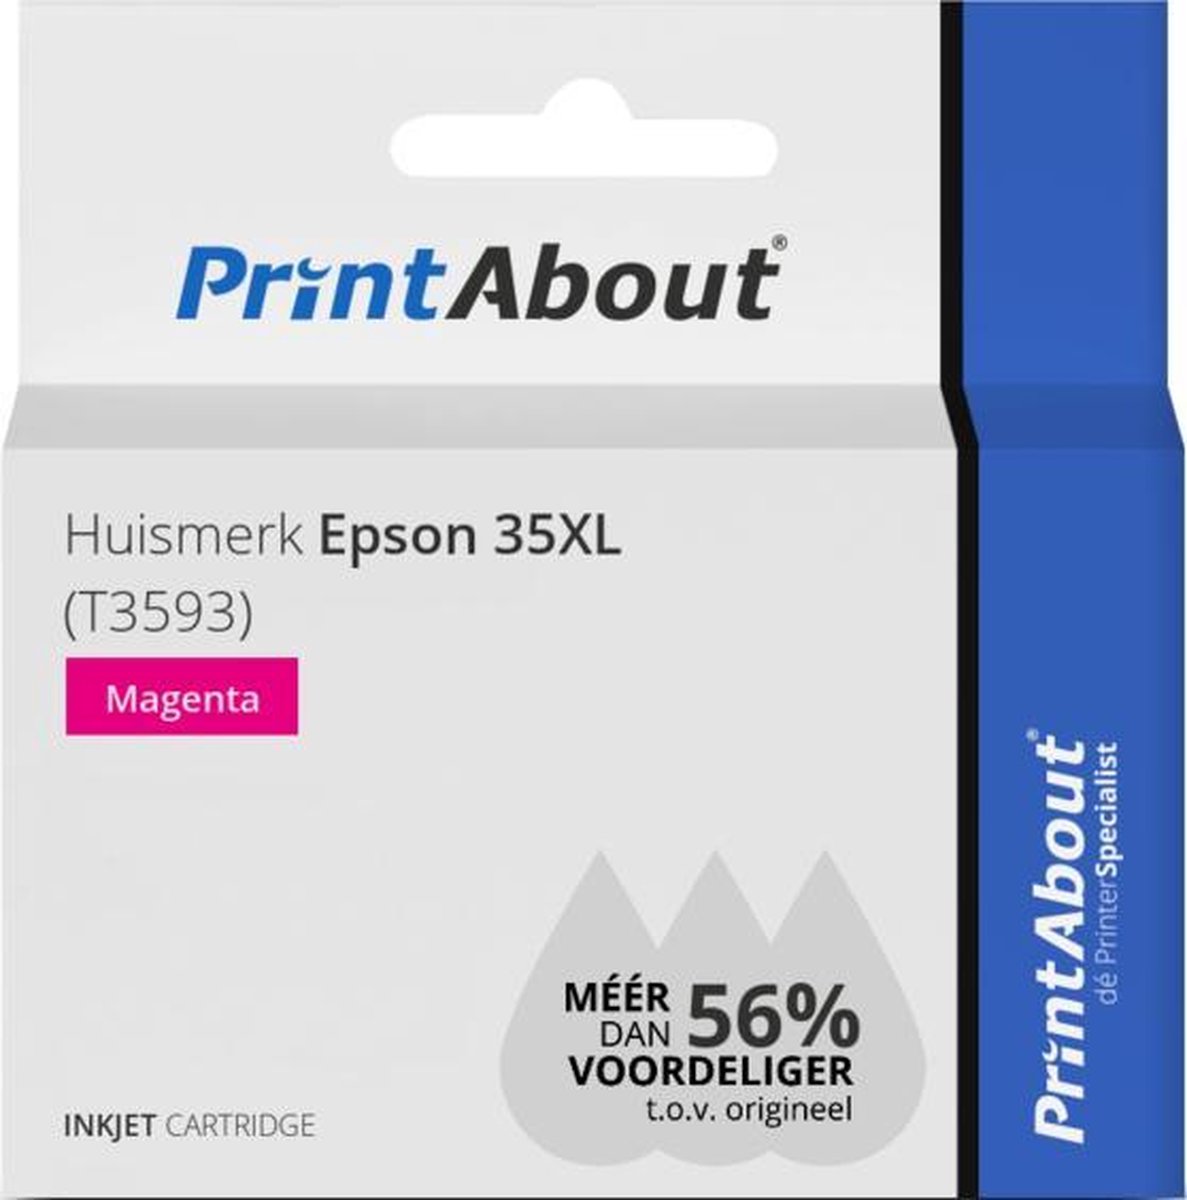 PrintAbout Huismerk Epson 35XL (T3593) Inktcartridge Hoge capaciteit - Magenta